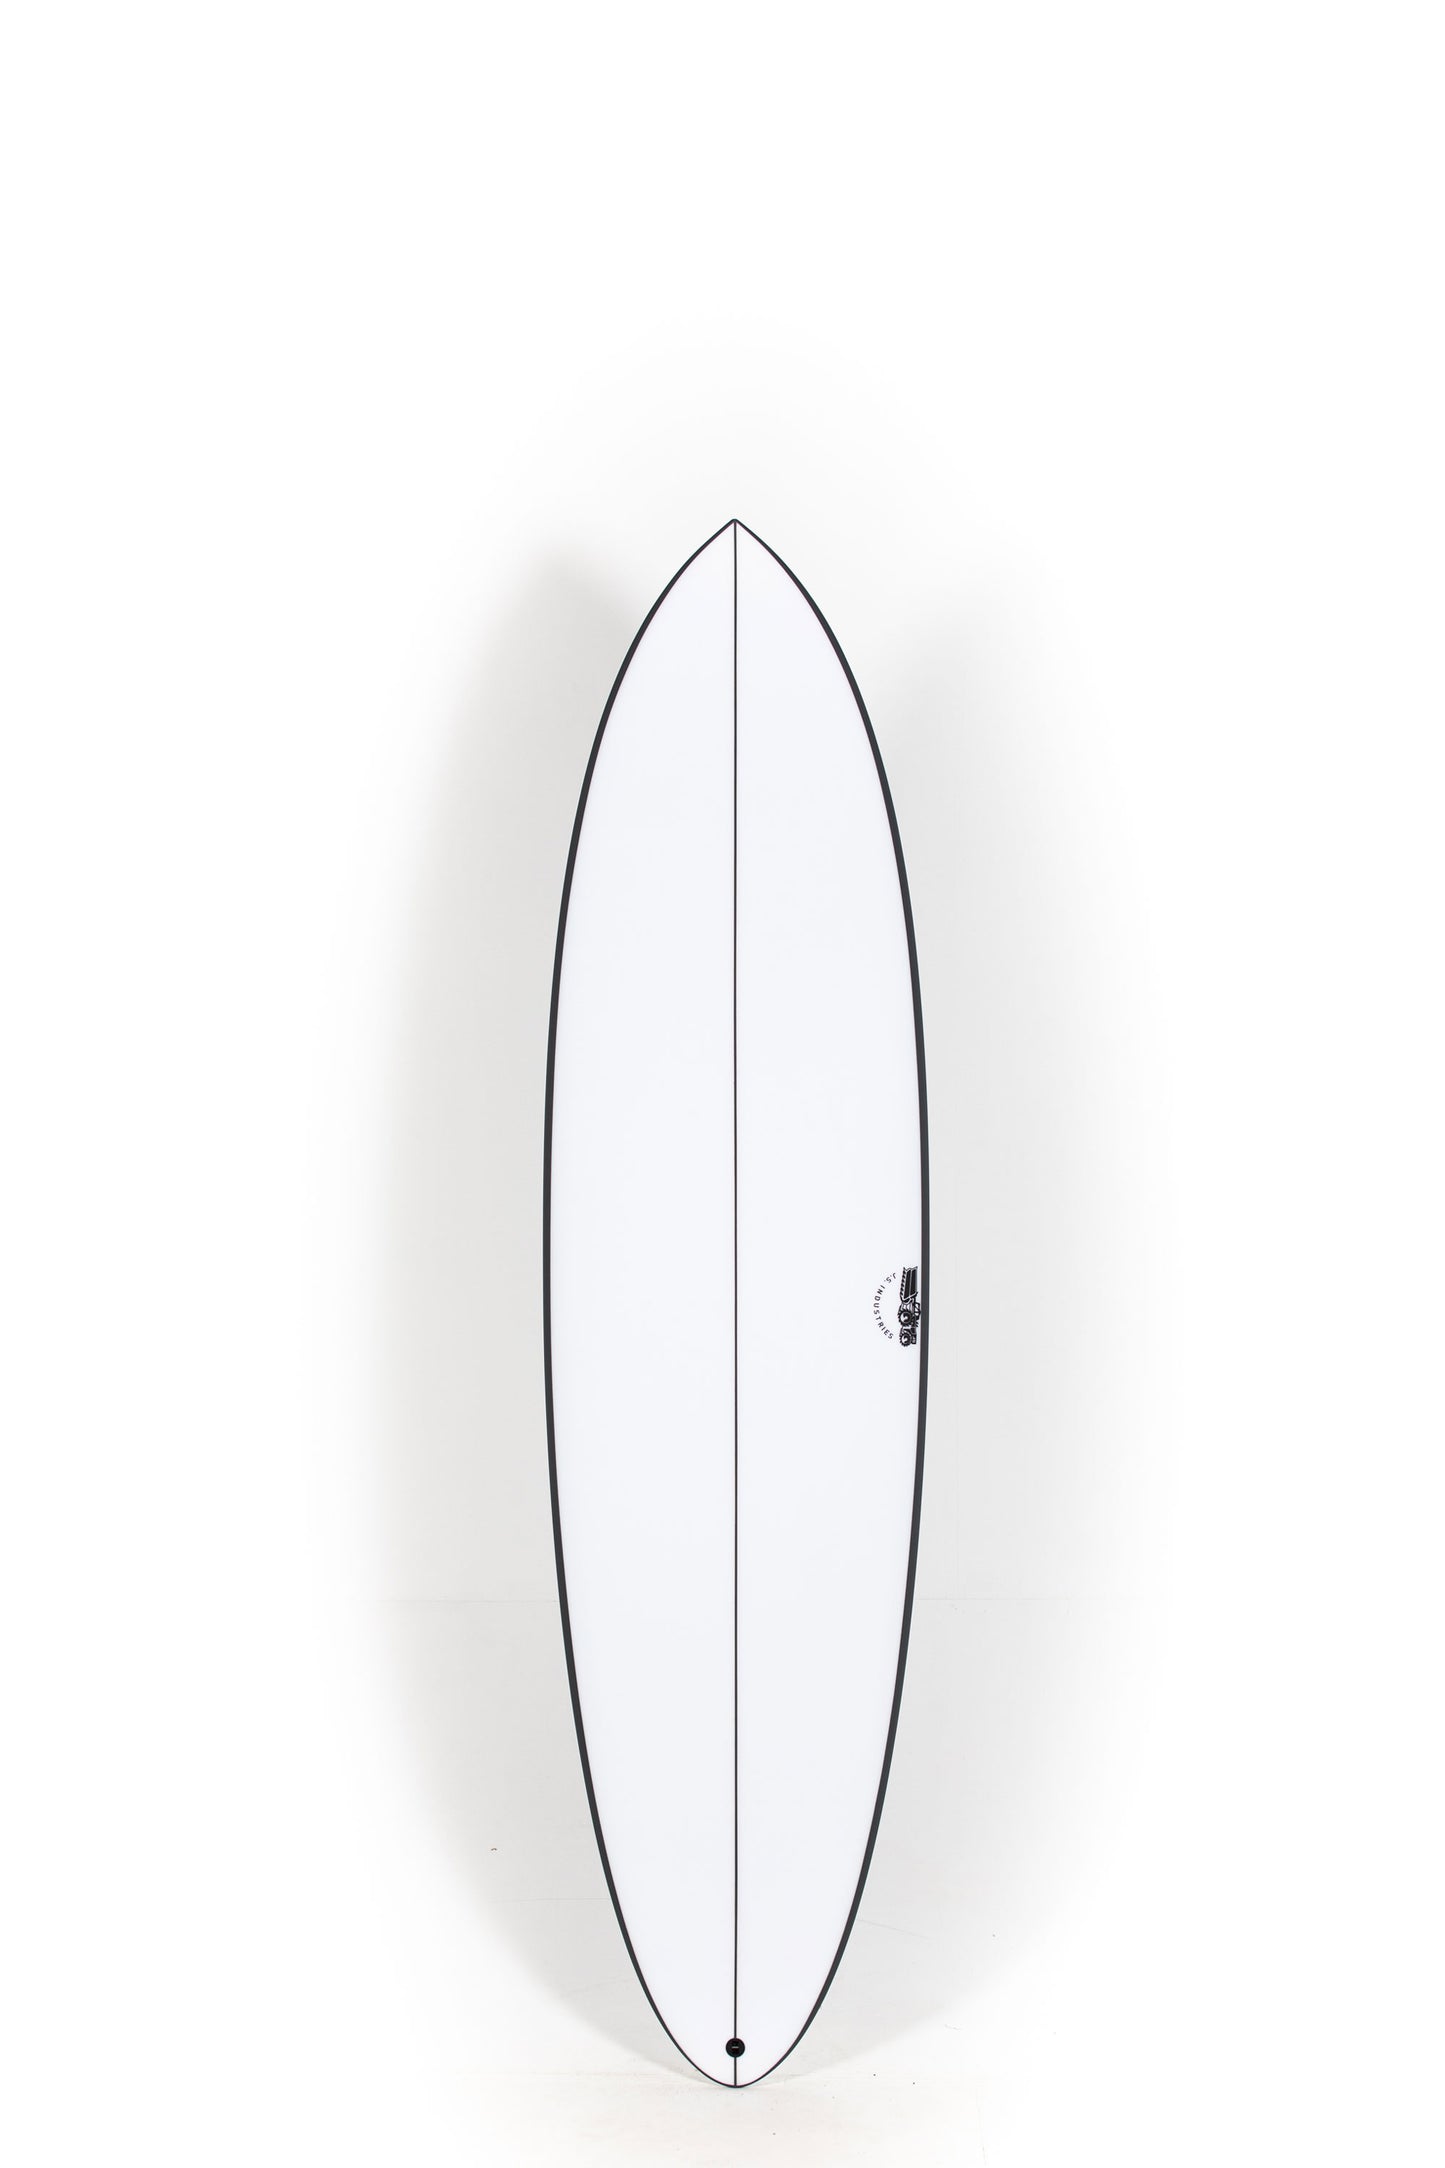 Pukas Surf Shop - JS Surfboards - EL BARON - 7'0" x 21 x 2,75 x 43,5L. - BIGBARON700